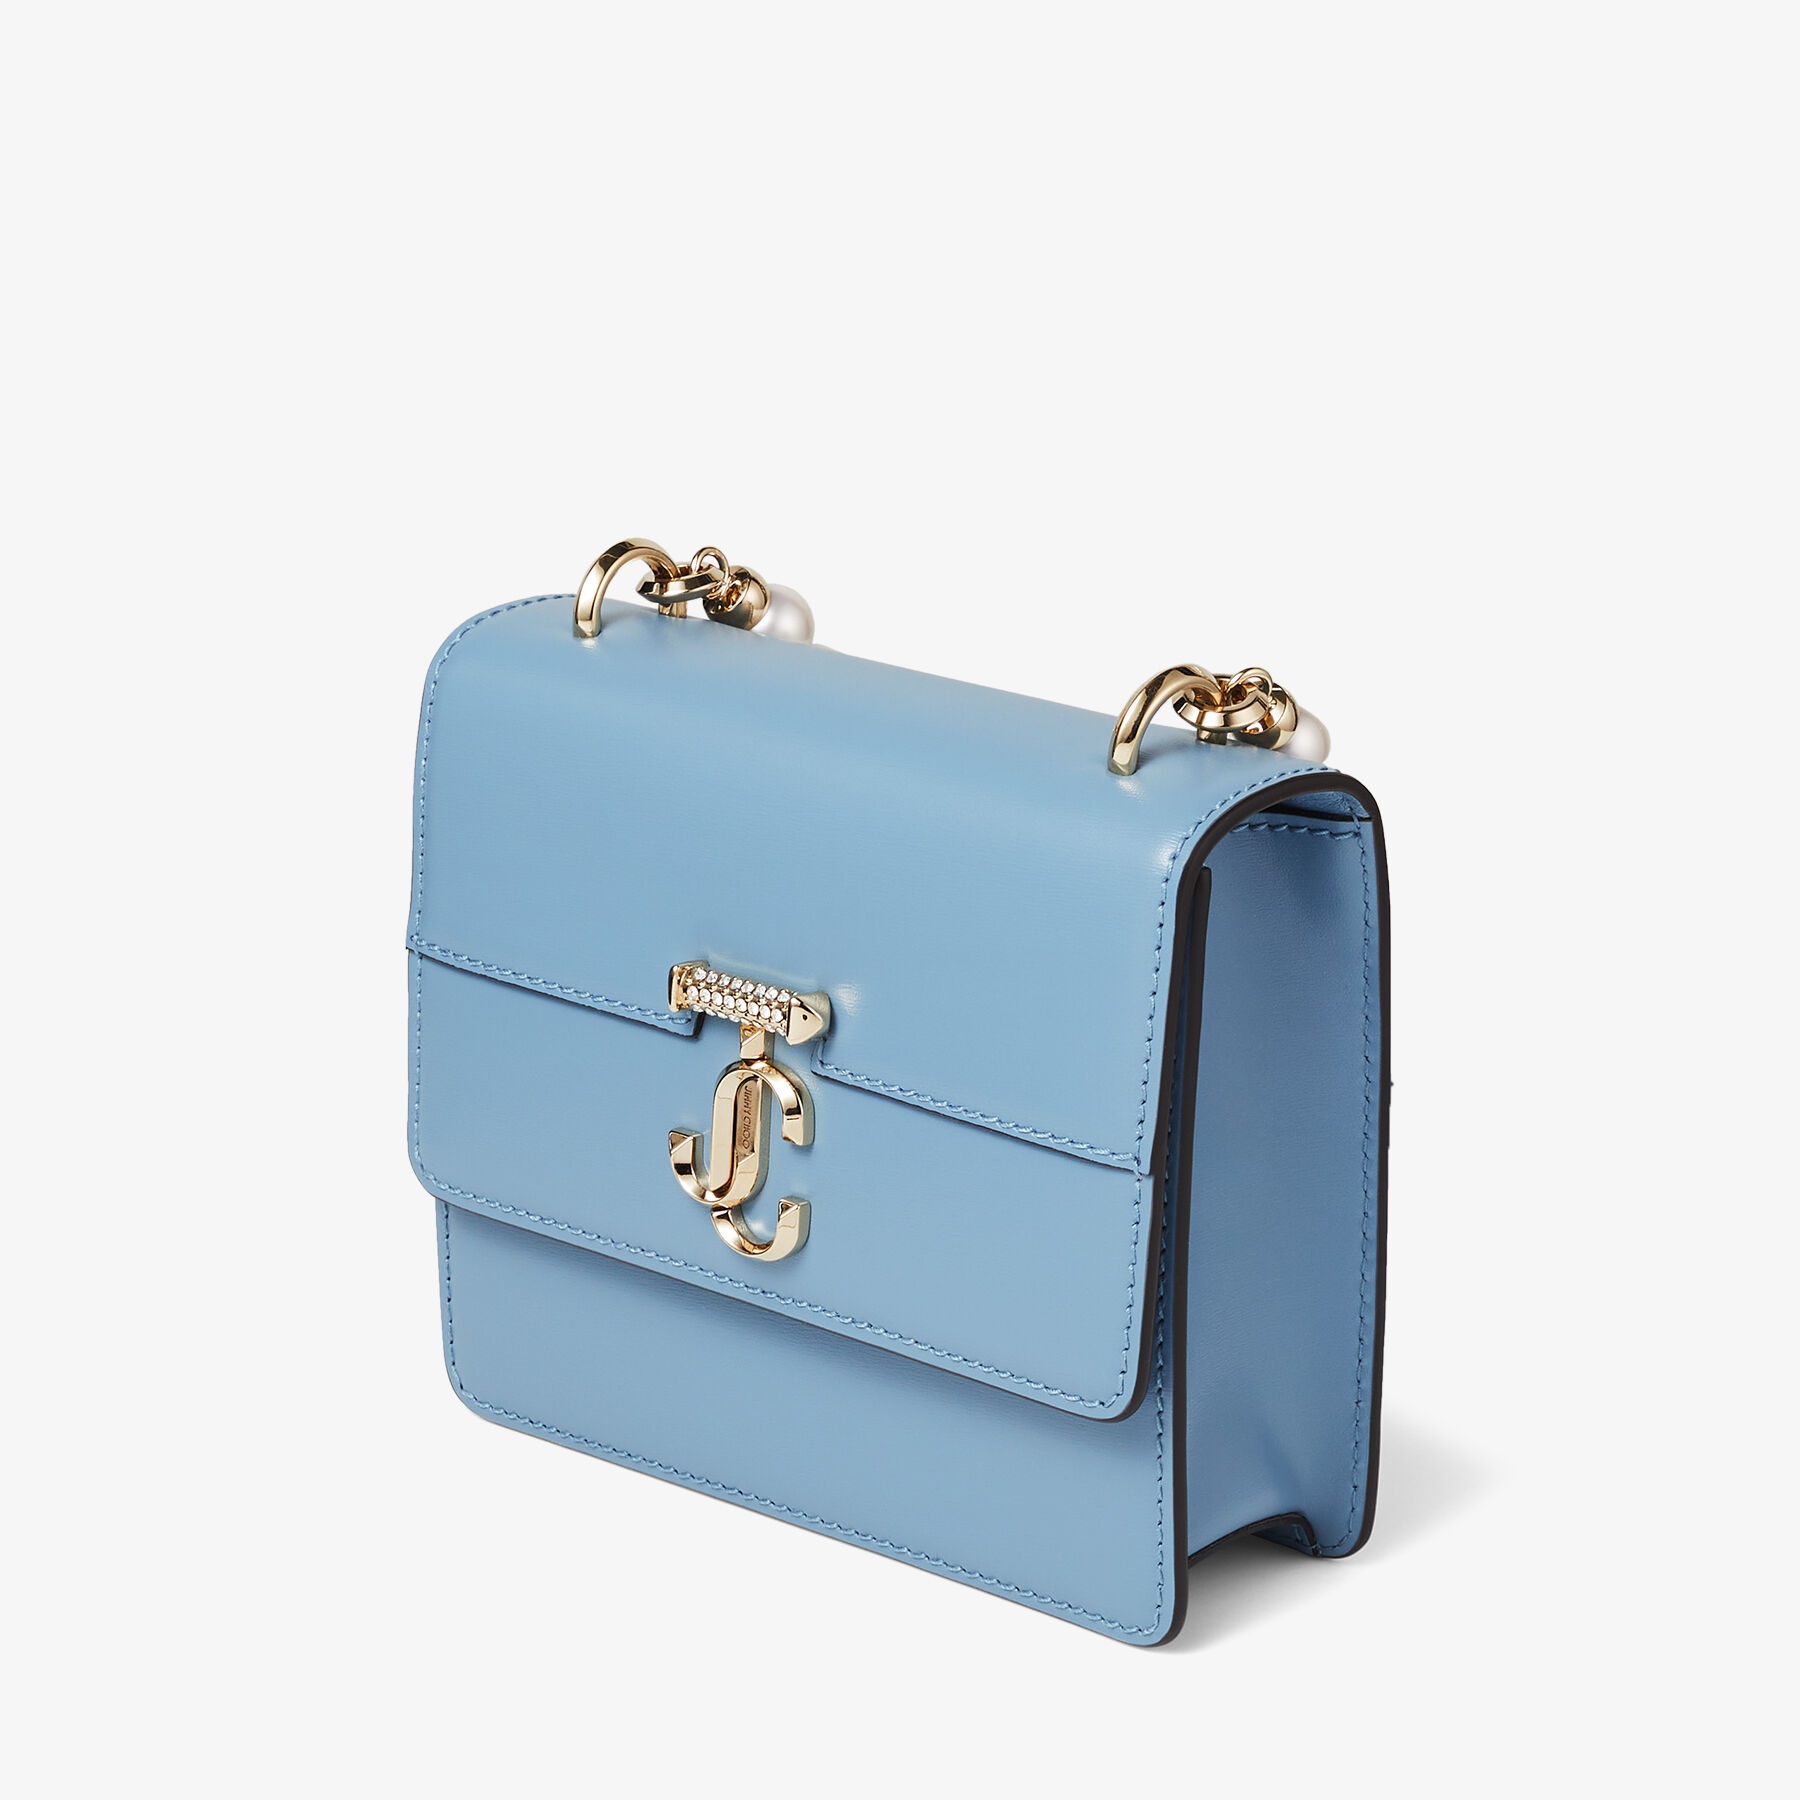 Varenne Quad XS
Smoky Blue Box Leather Shoulder Bag with Pearl Strap - 5